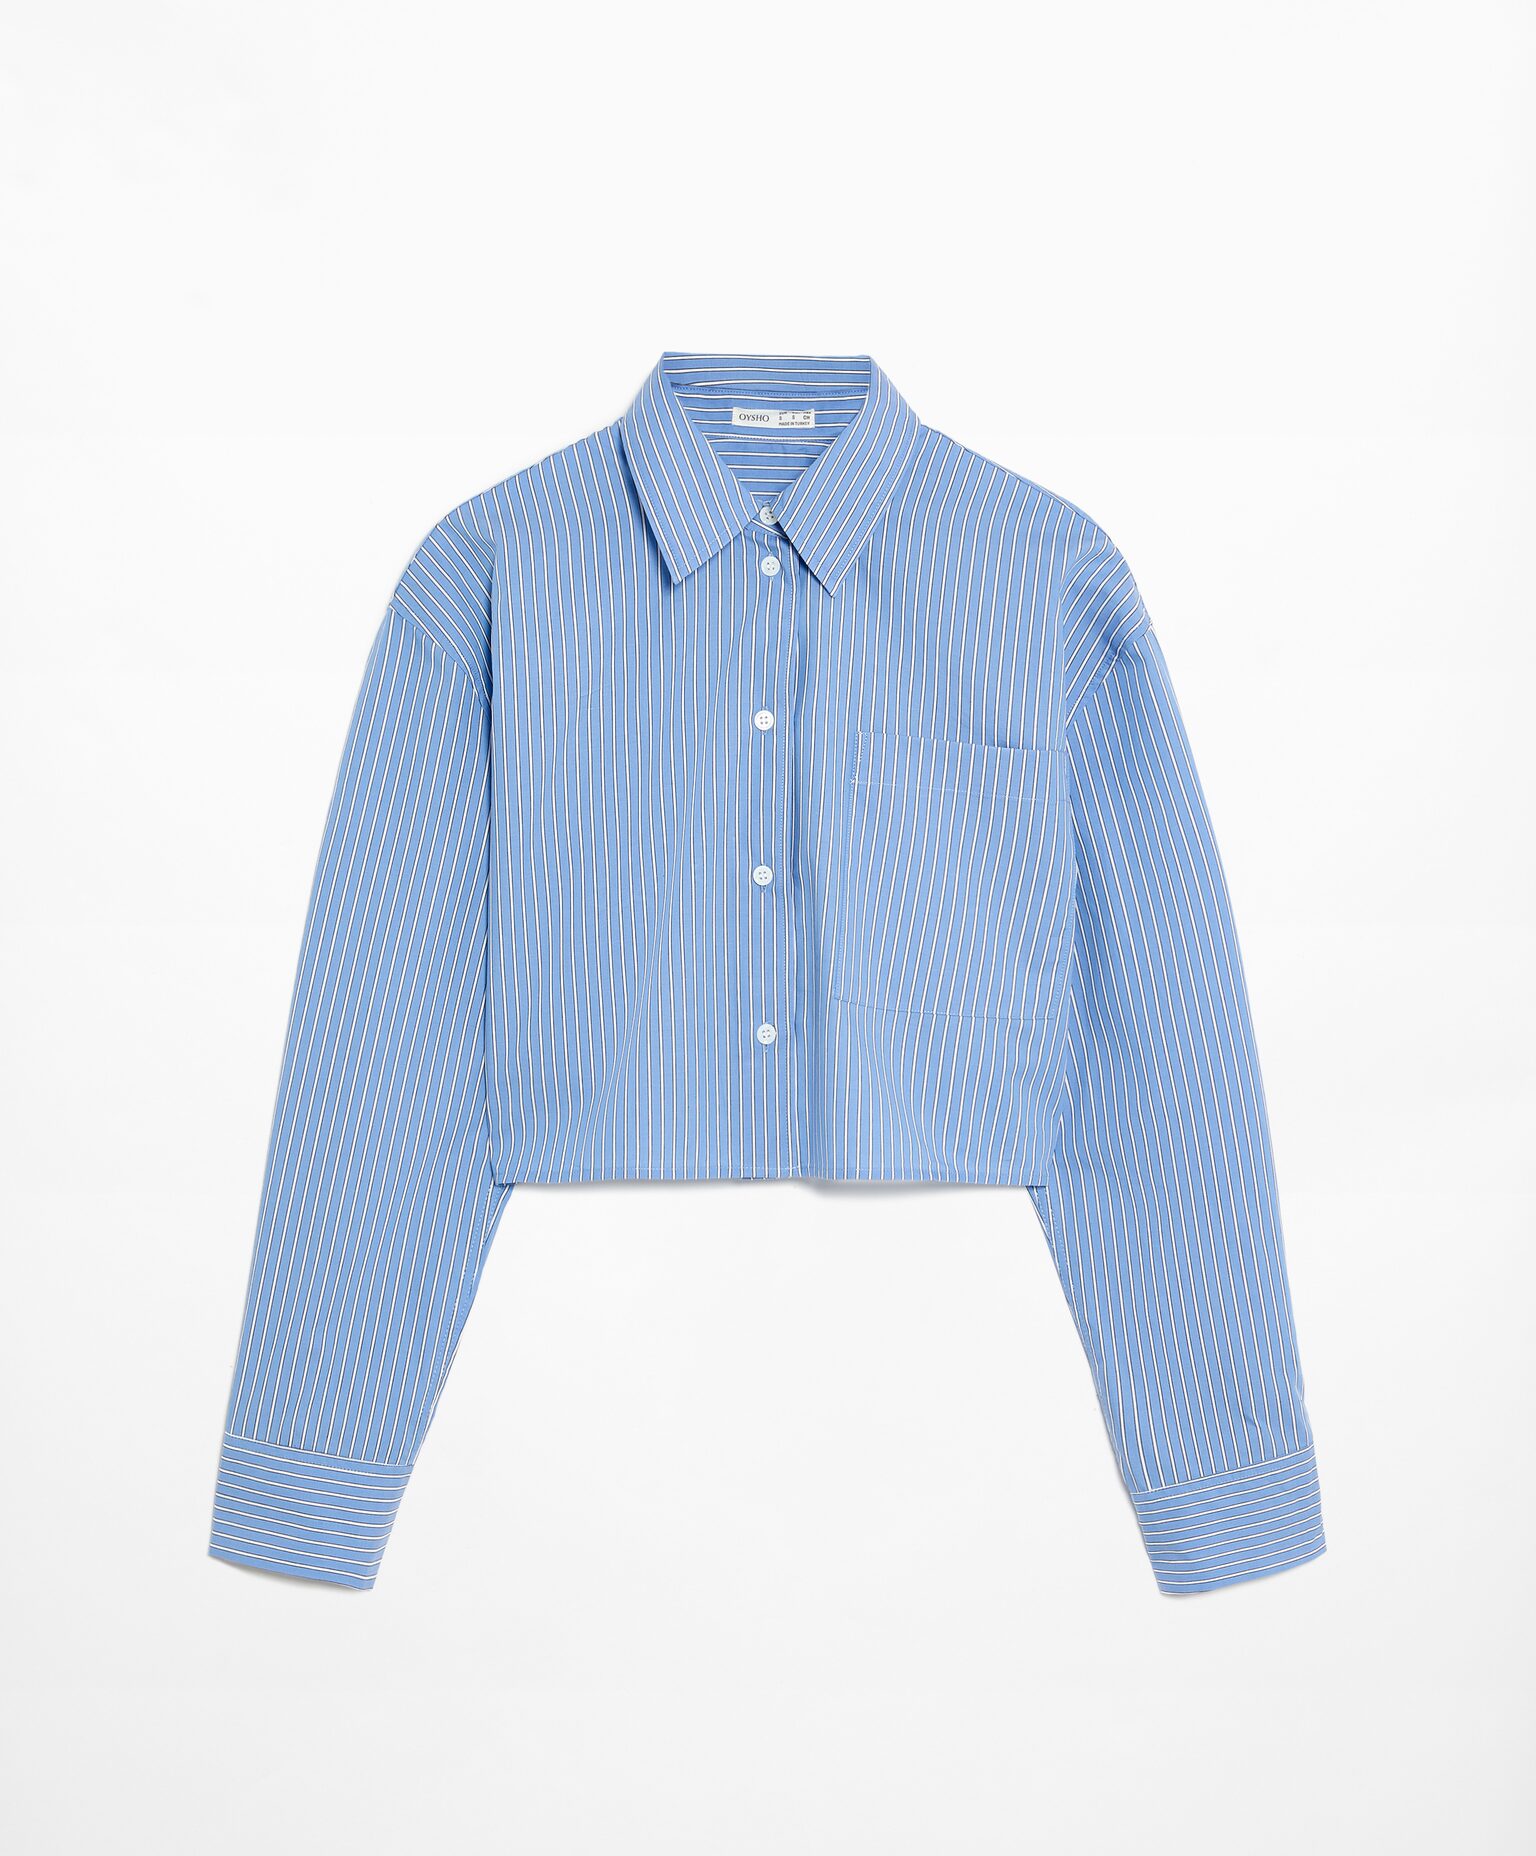 Рубашка Oysho Striped, голубой рубашка в полоску с длинными рукавами l синий